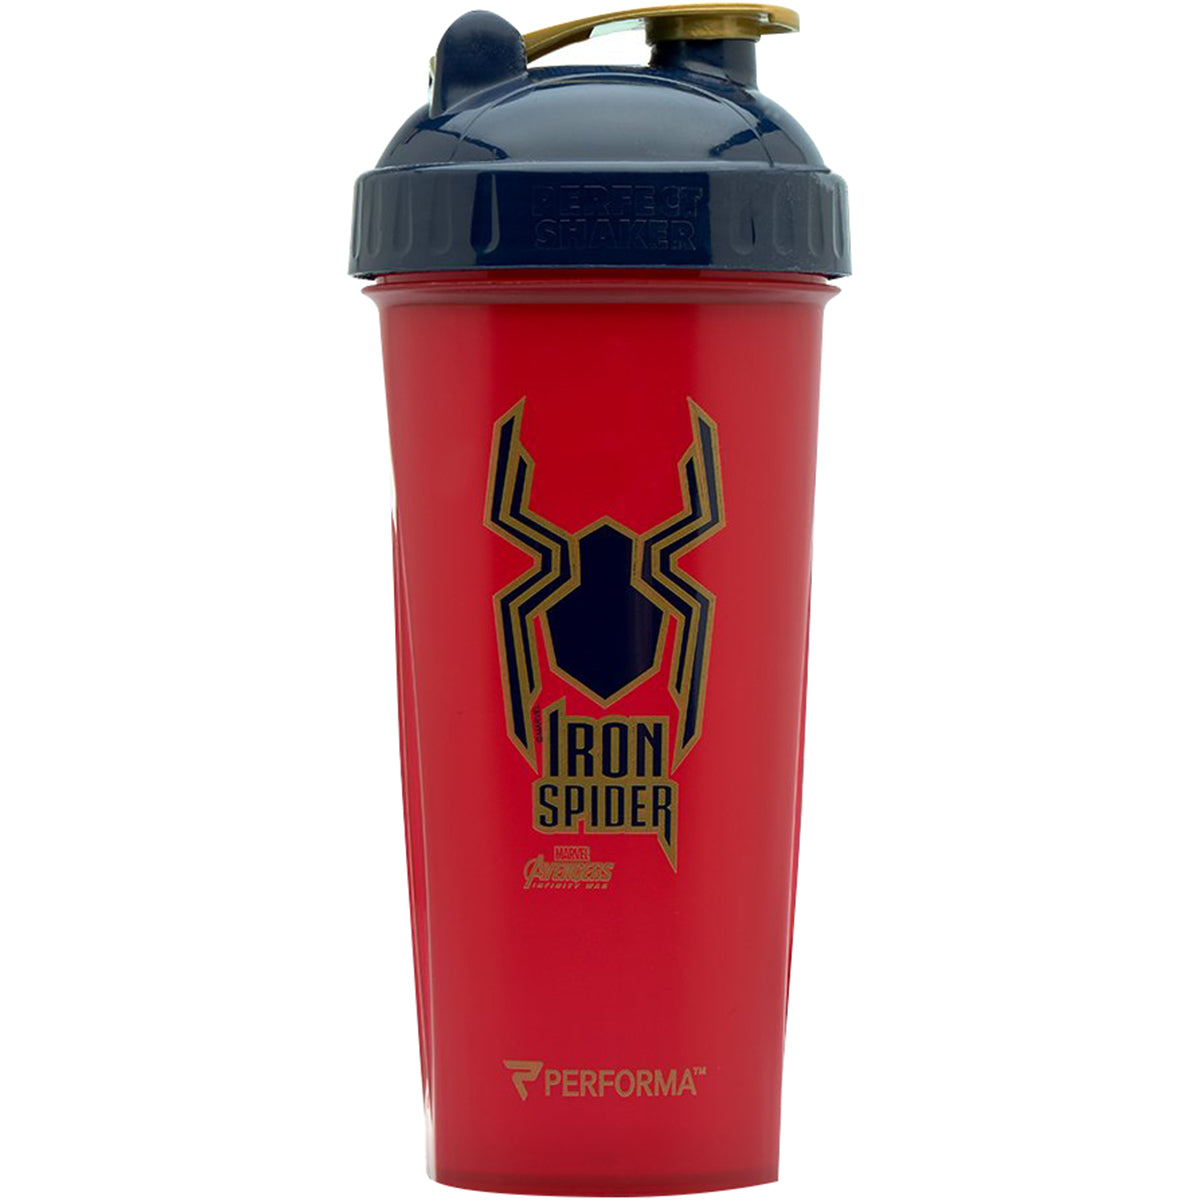 Performa PerfectShaker Avengers Infinity War Shaker Cup Bottle - Iron Spider PerfectShaker